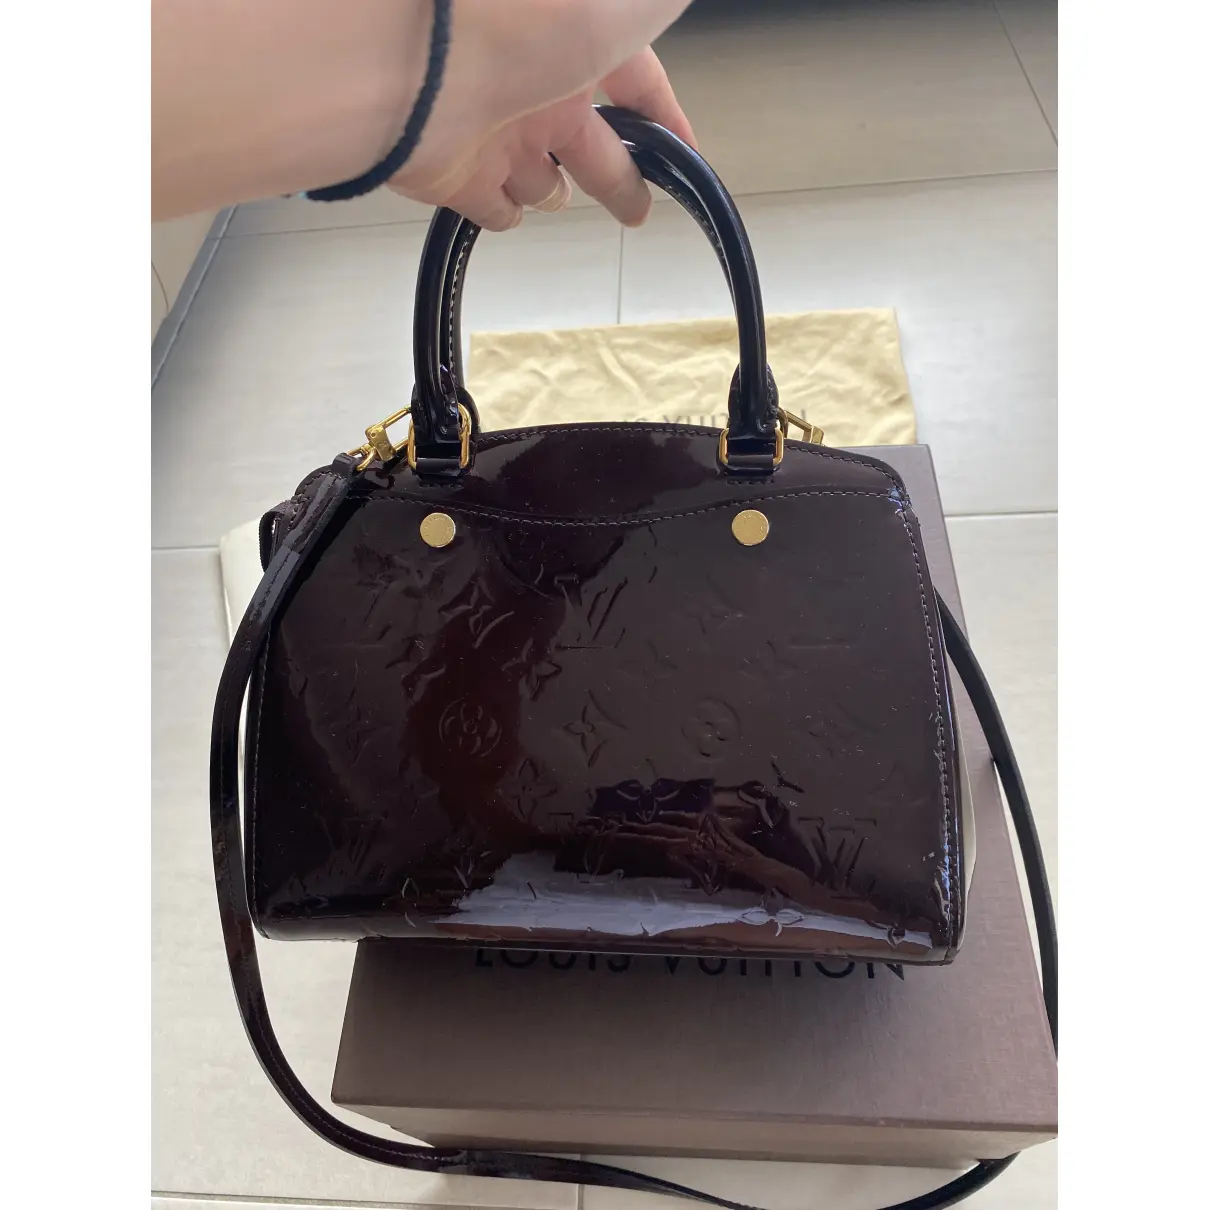 Buy Louis Vuitton Brera patent leather crossbody bag online